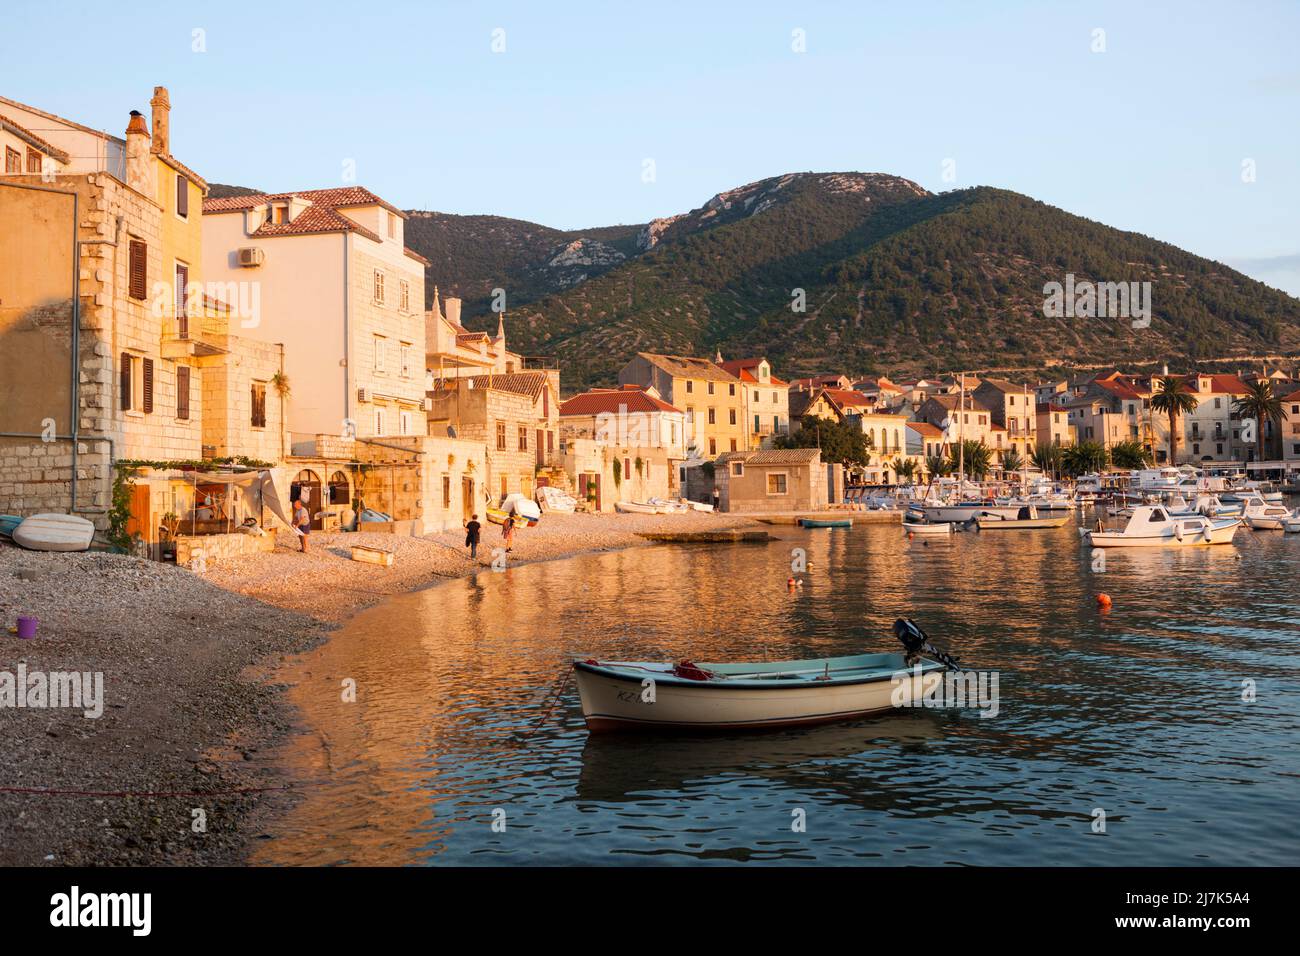 Houses of Komiza, Vis Island, Mediterranean Sea, Croatia Stock Photo